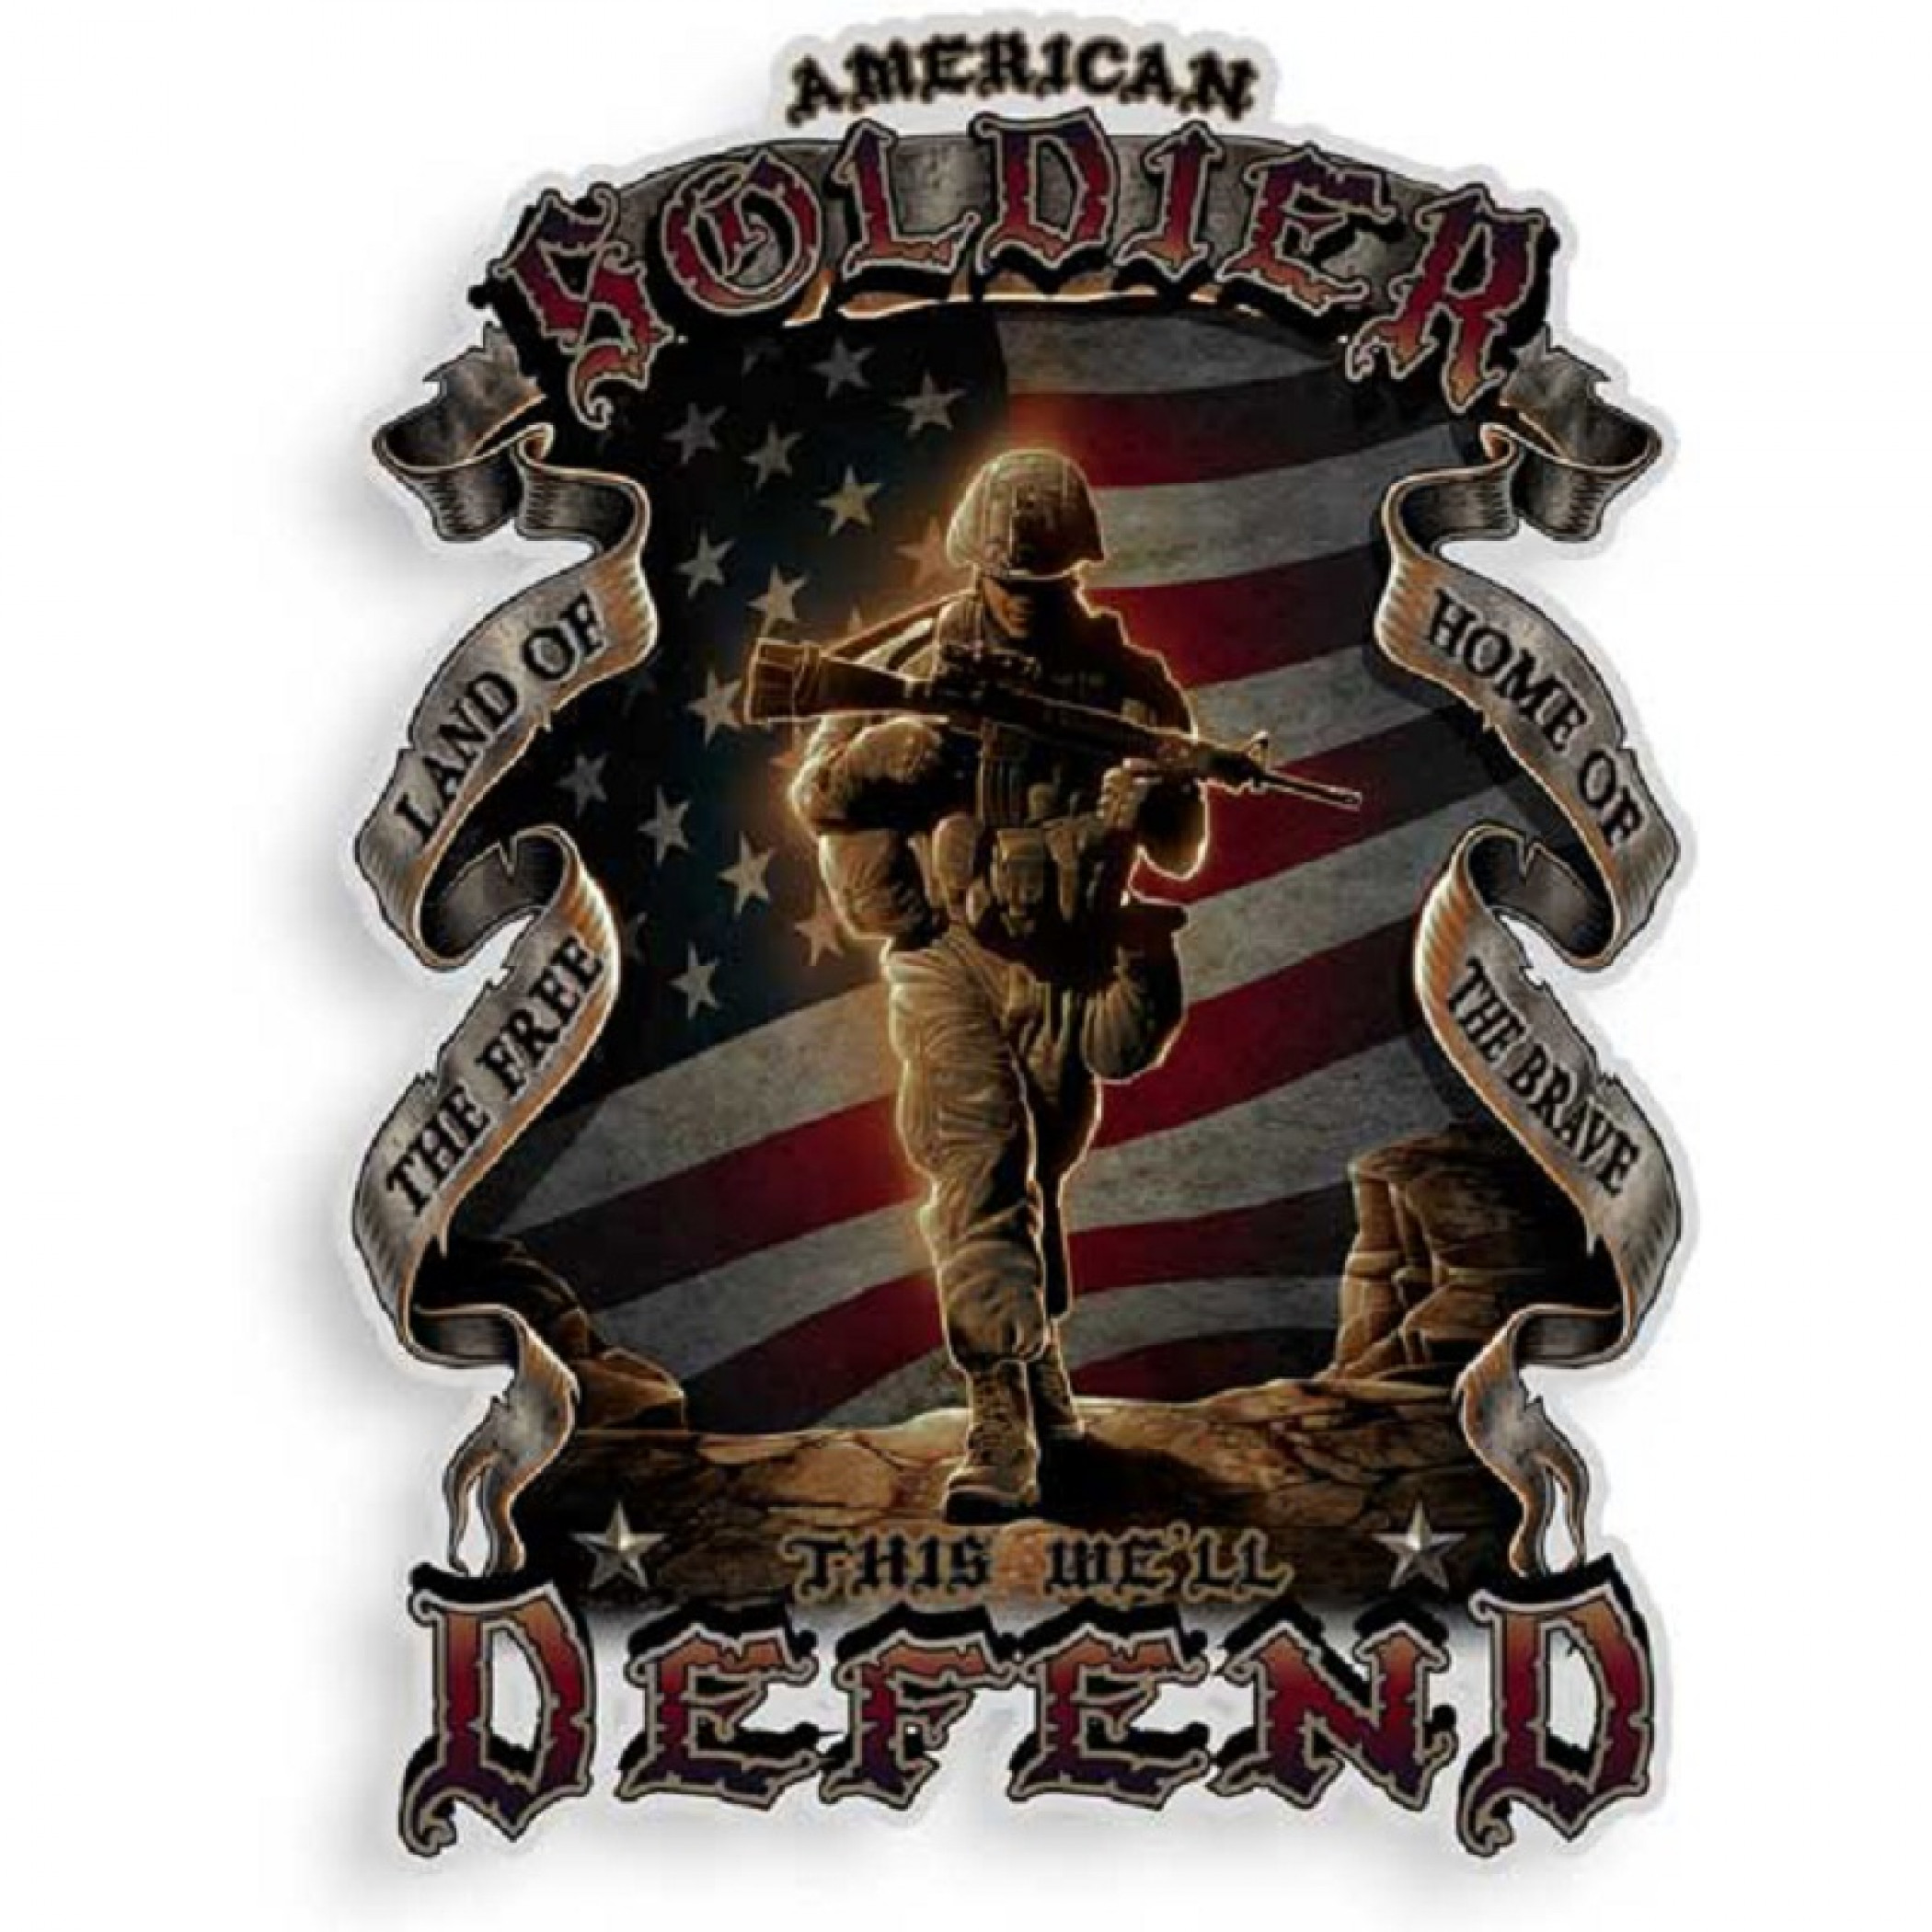 American Soldier Decal Sticker